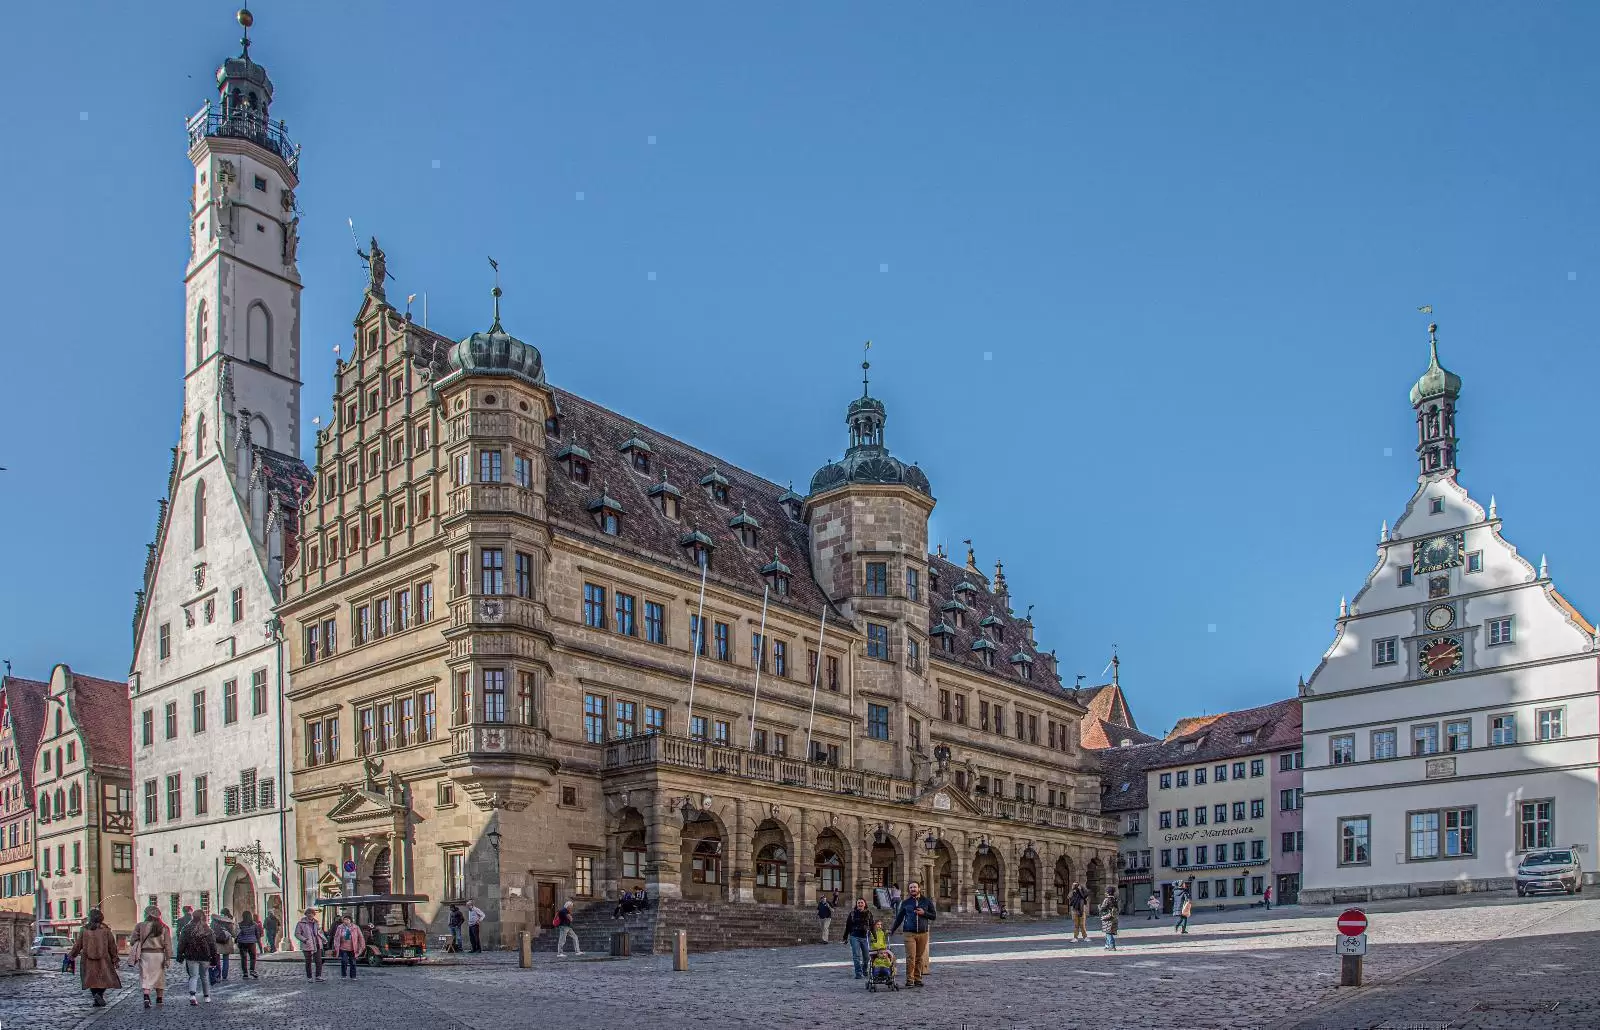 Rothenburg Town Hall